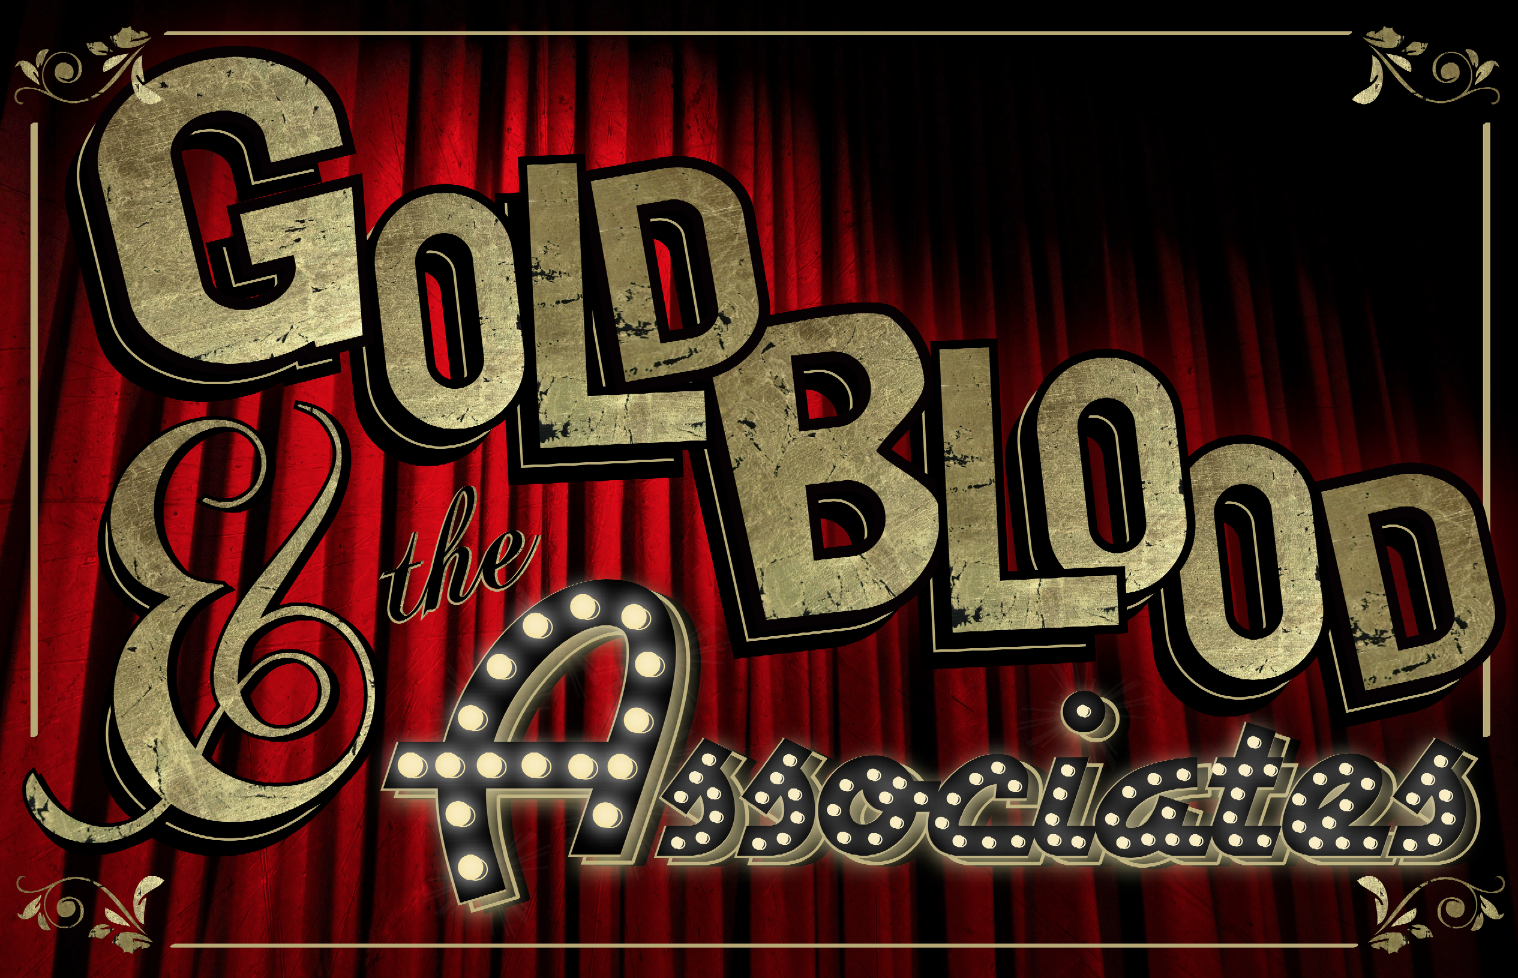 GoldBlood and Associates